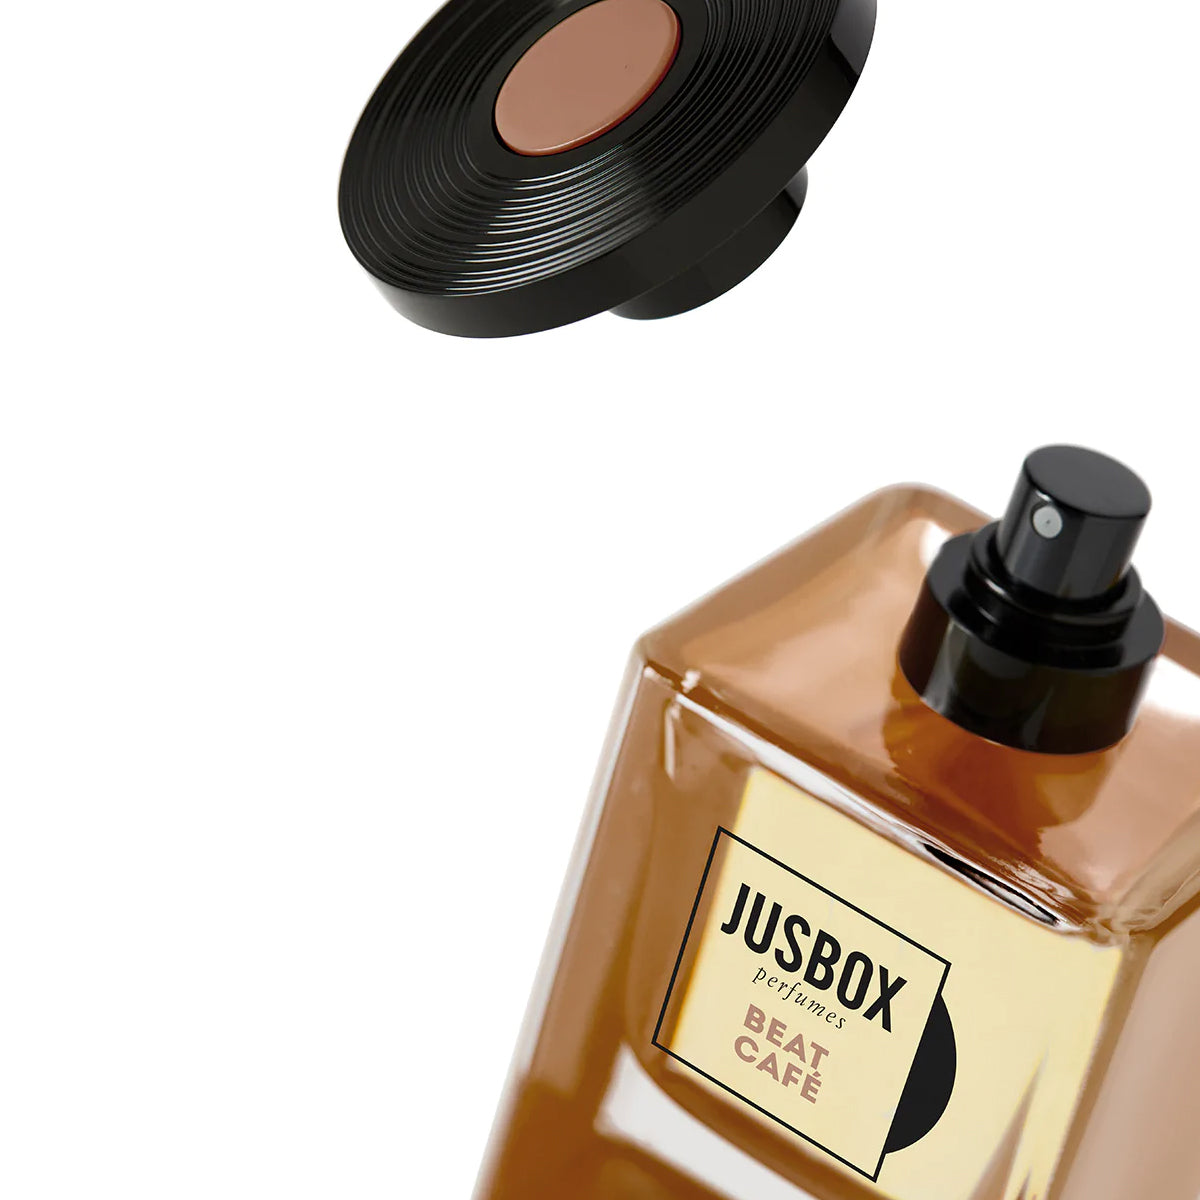 Beat Cafe Set -  Jusbox Parfumes - EDP 78ml + Shower Gel 150ml